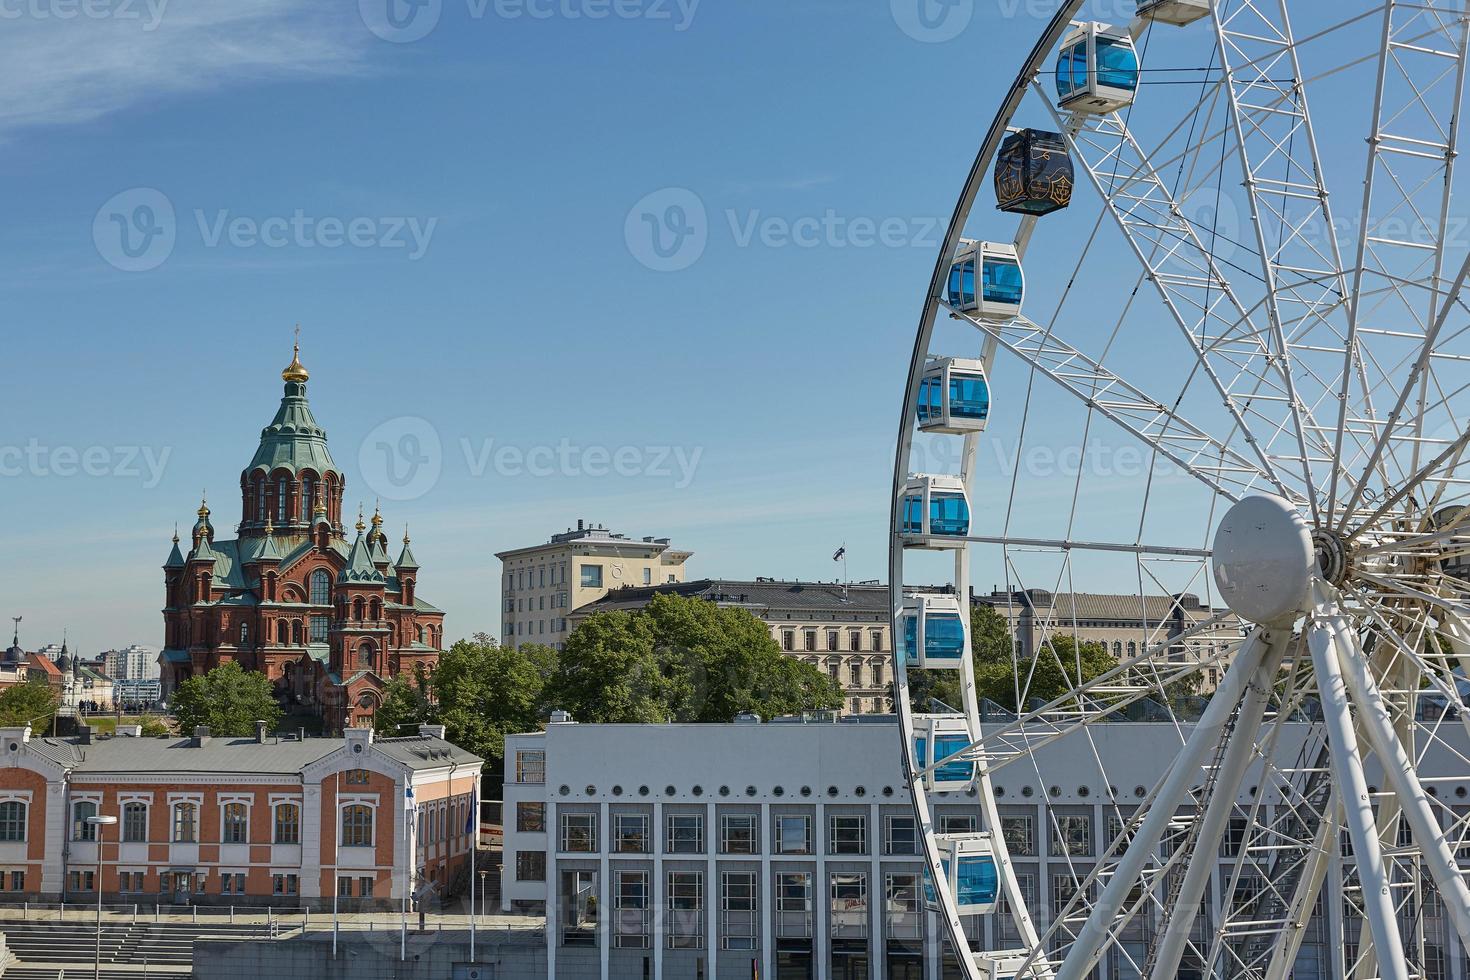 pariserhjul och uspenskikatedralen i Helsingfors finland foto